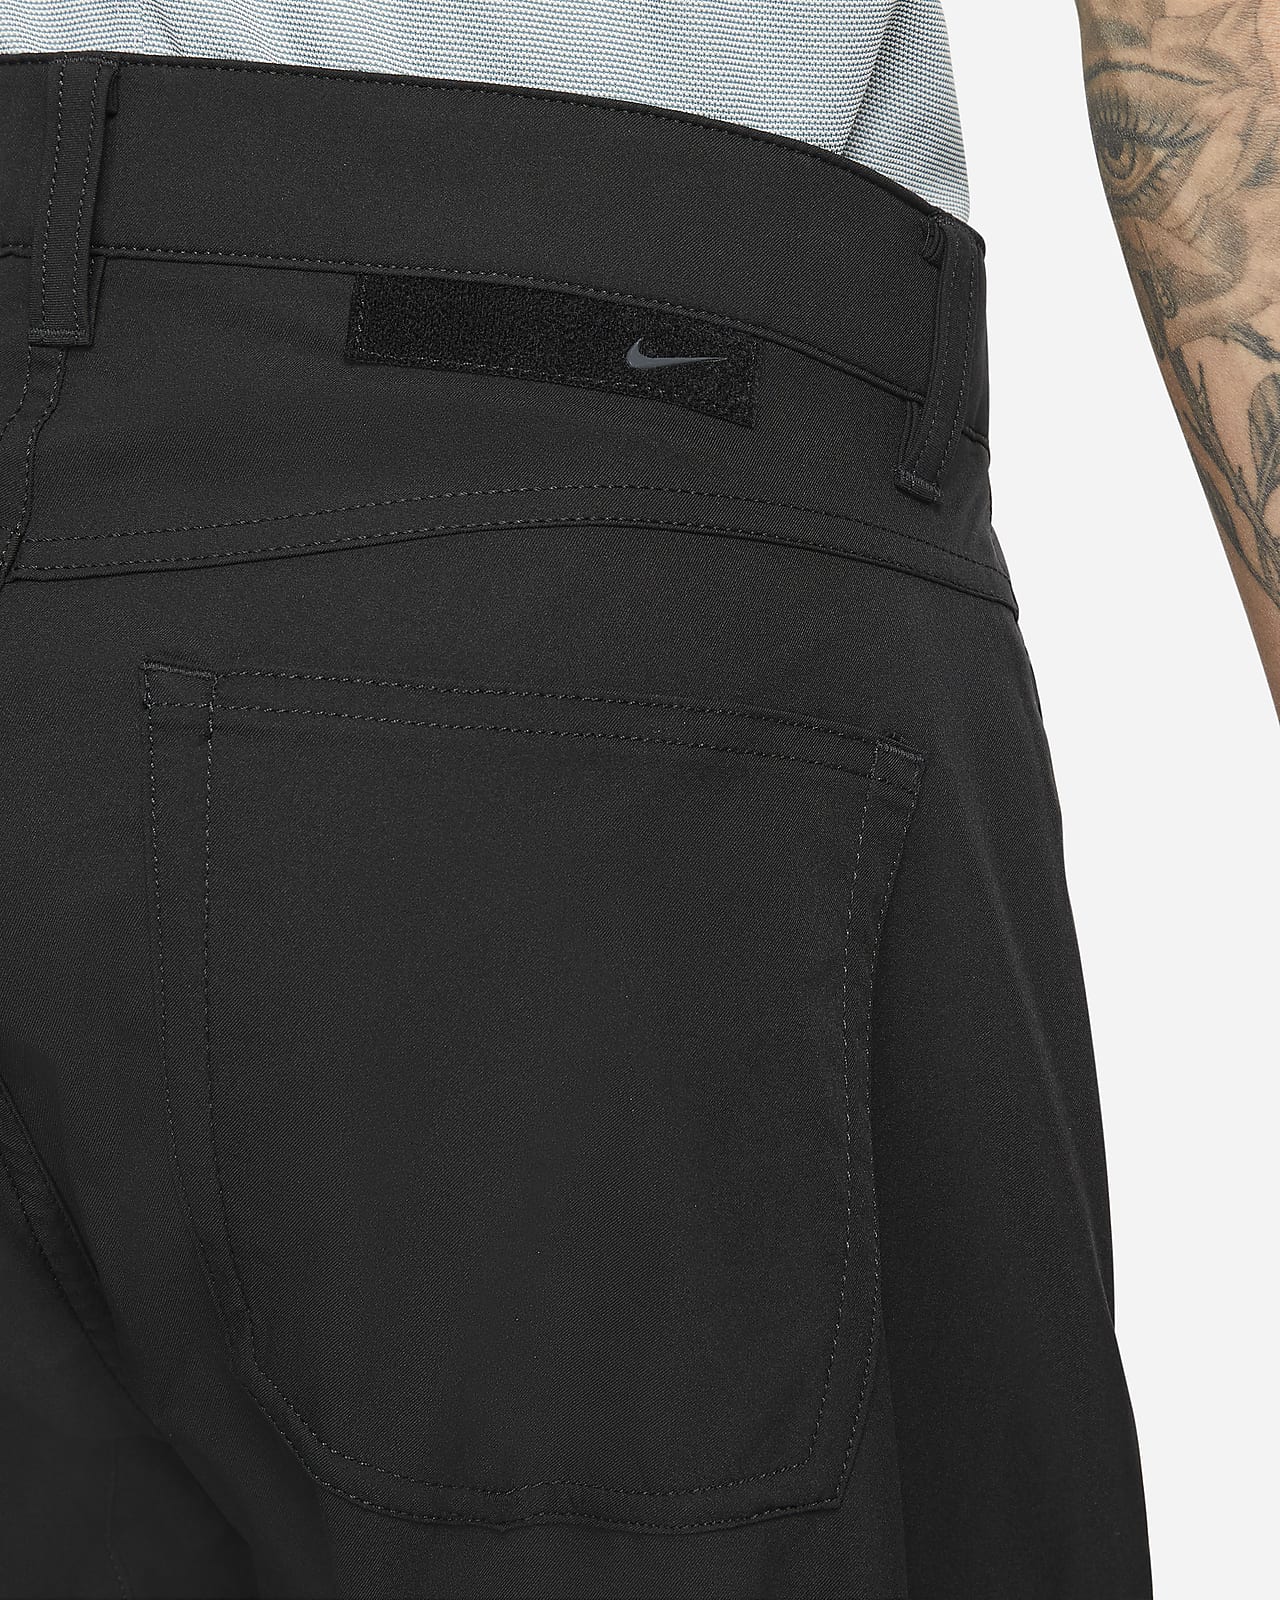 Nike 2017 Modern Fit Washed Golf Pants Dark Grey 3532  Amazonin  Clothing  Accessories